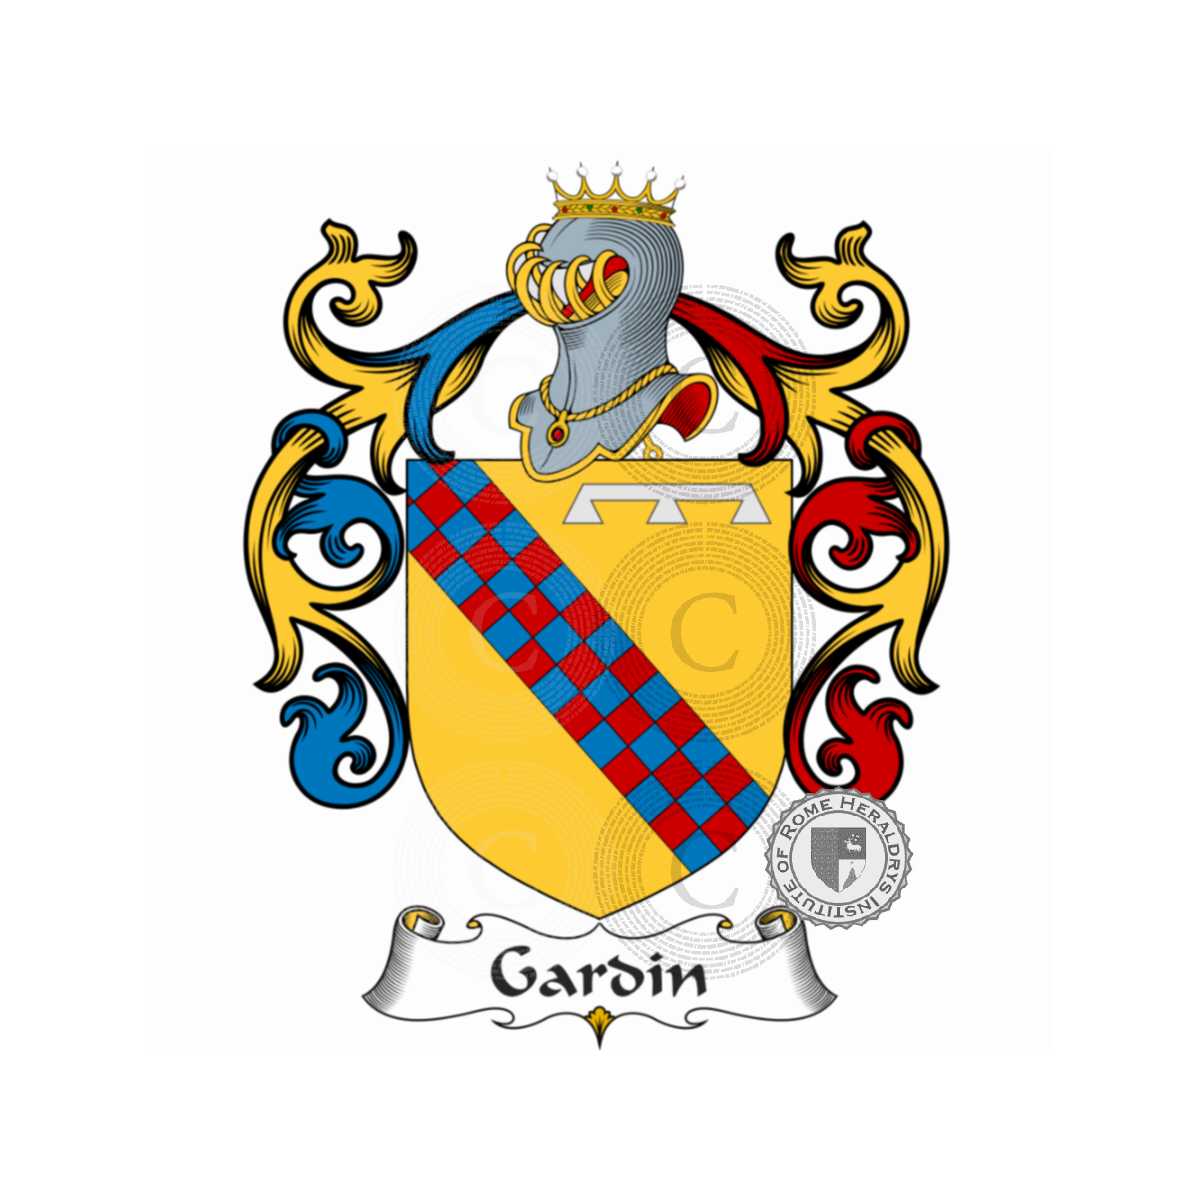 Escudo de la familiaGardin, du Gardin,Gardi,Gardin de Boishamon,Gardin de Lapillardière